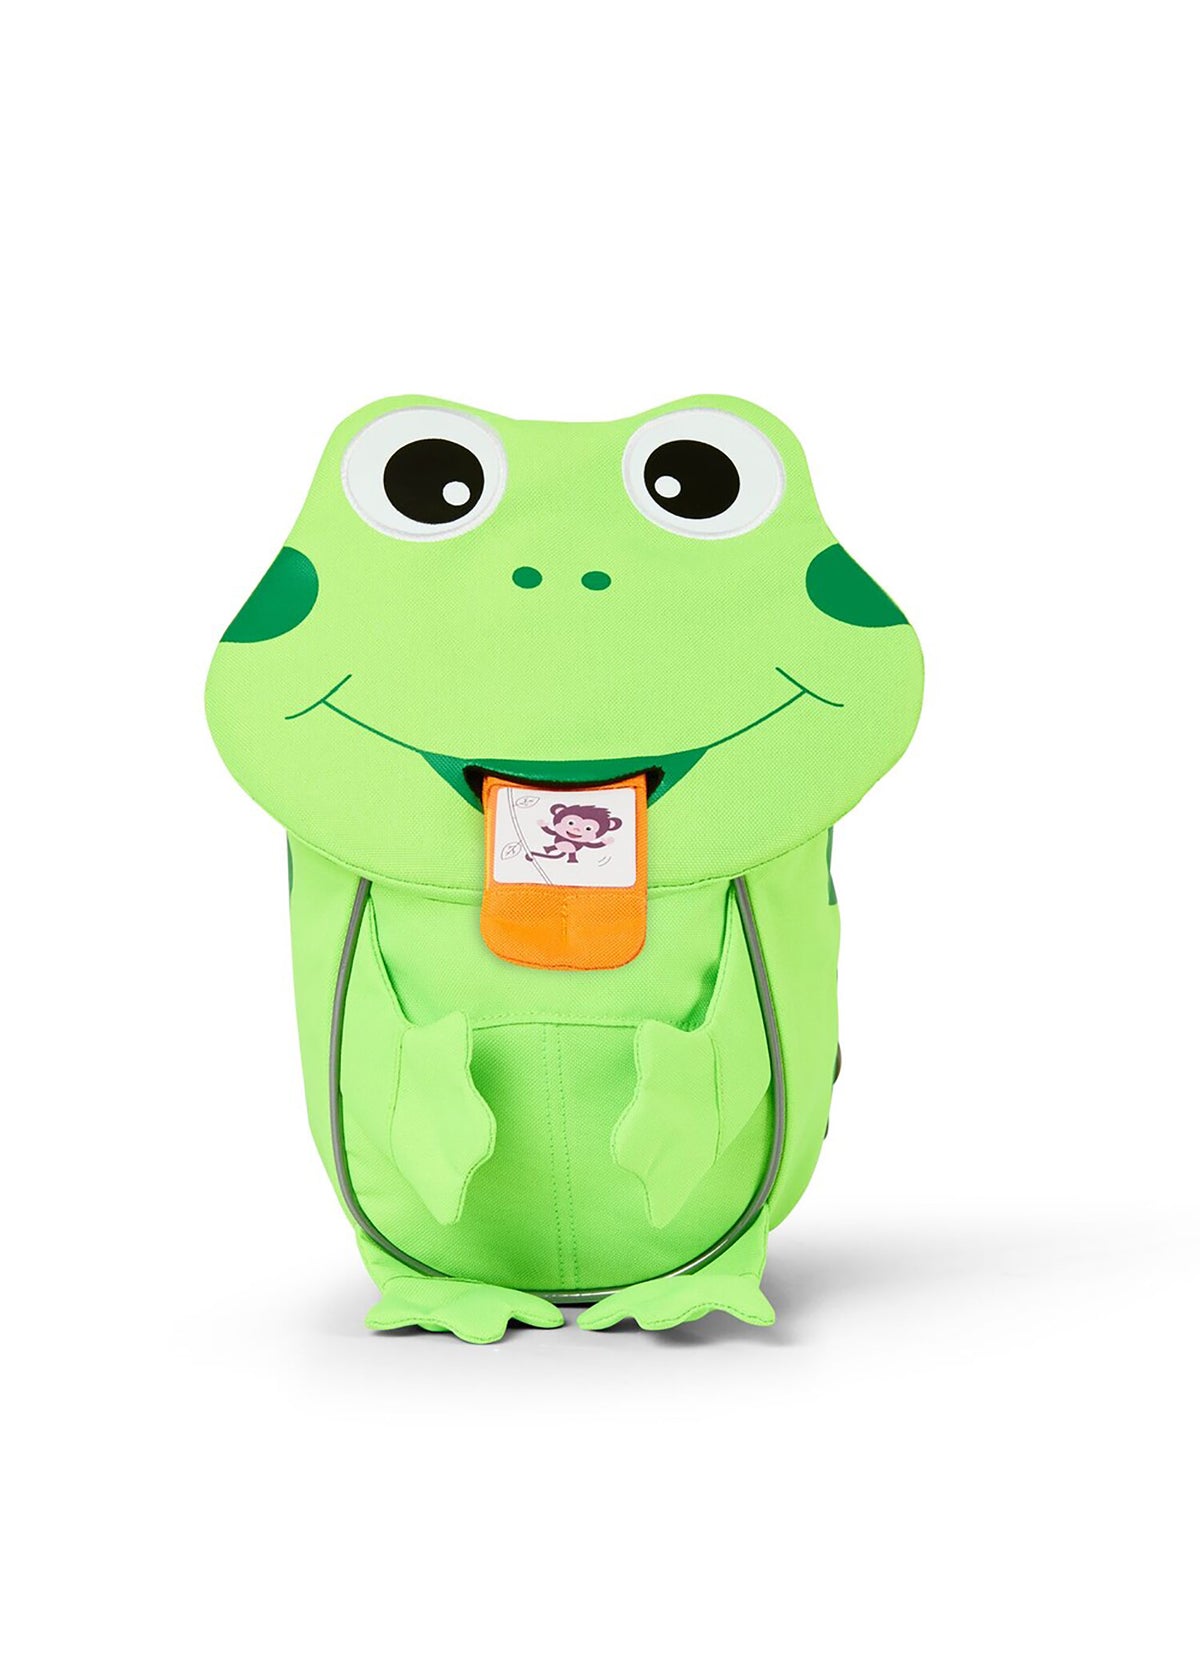 Children's backpack, small - Neon Frog